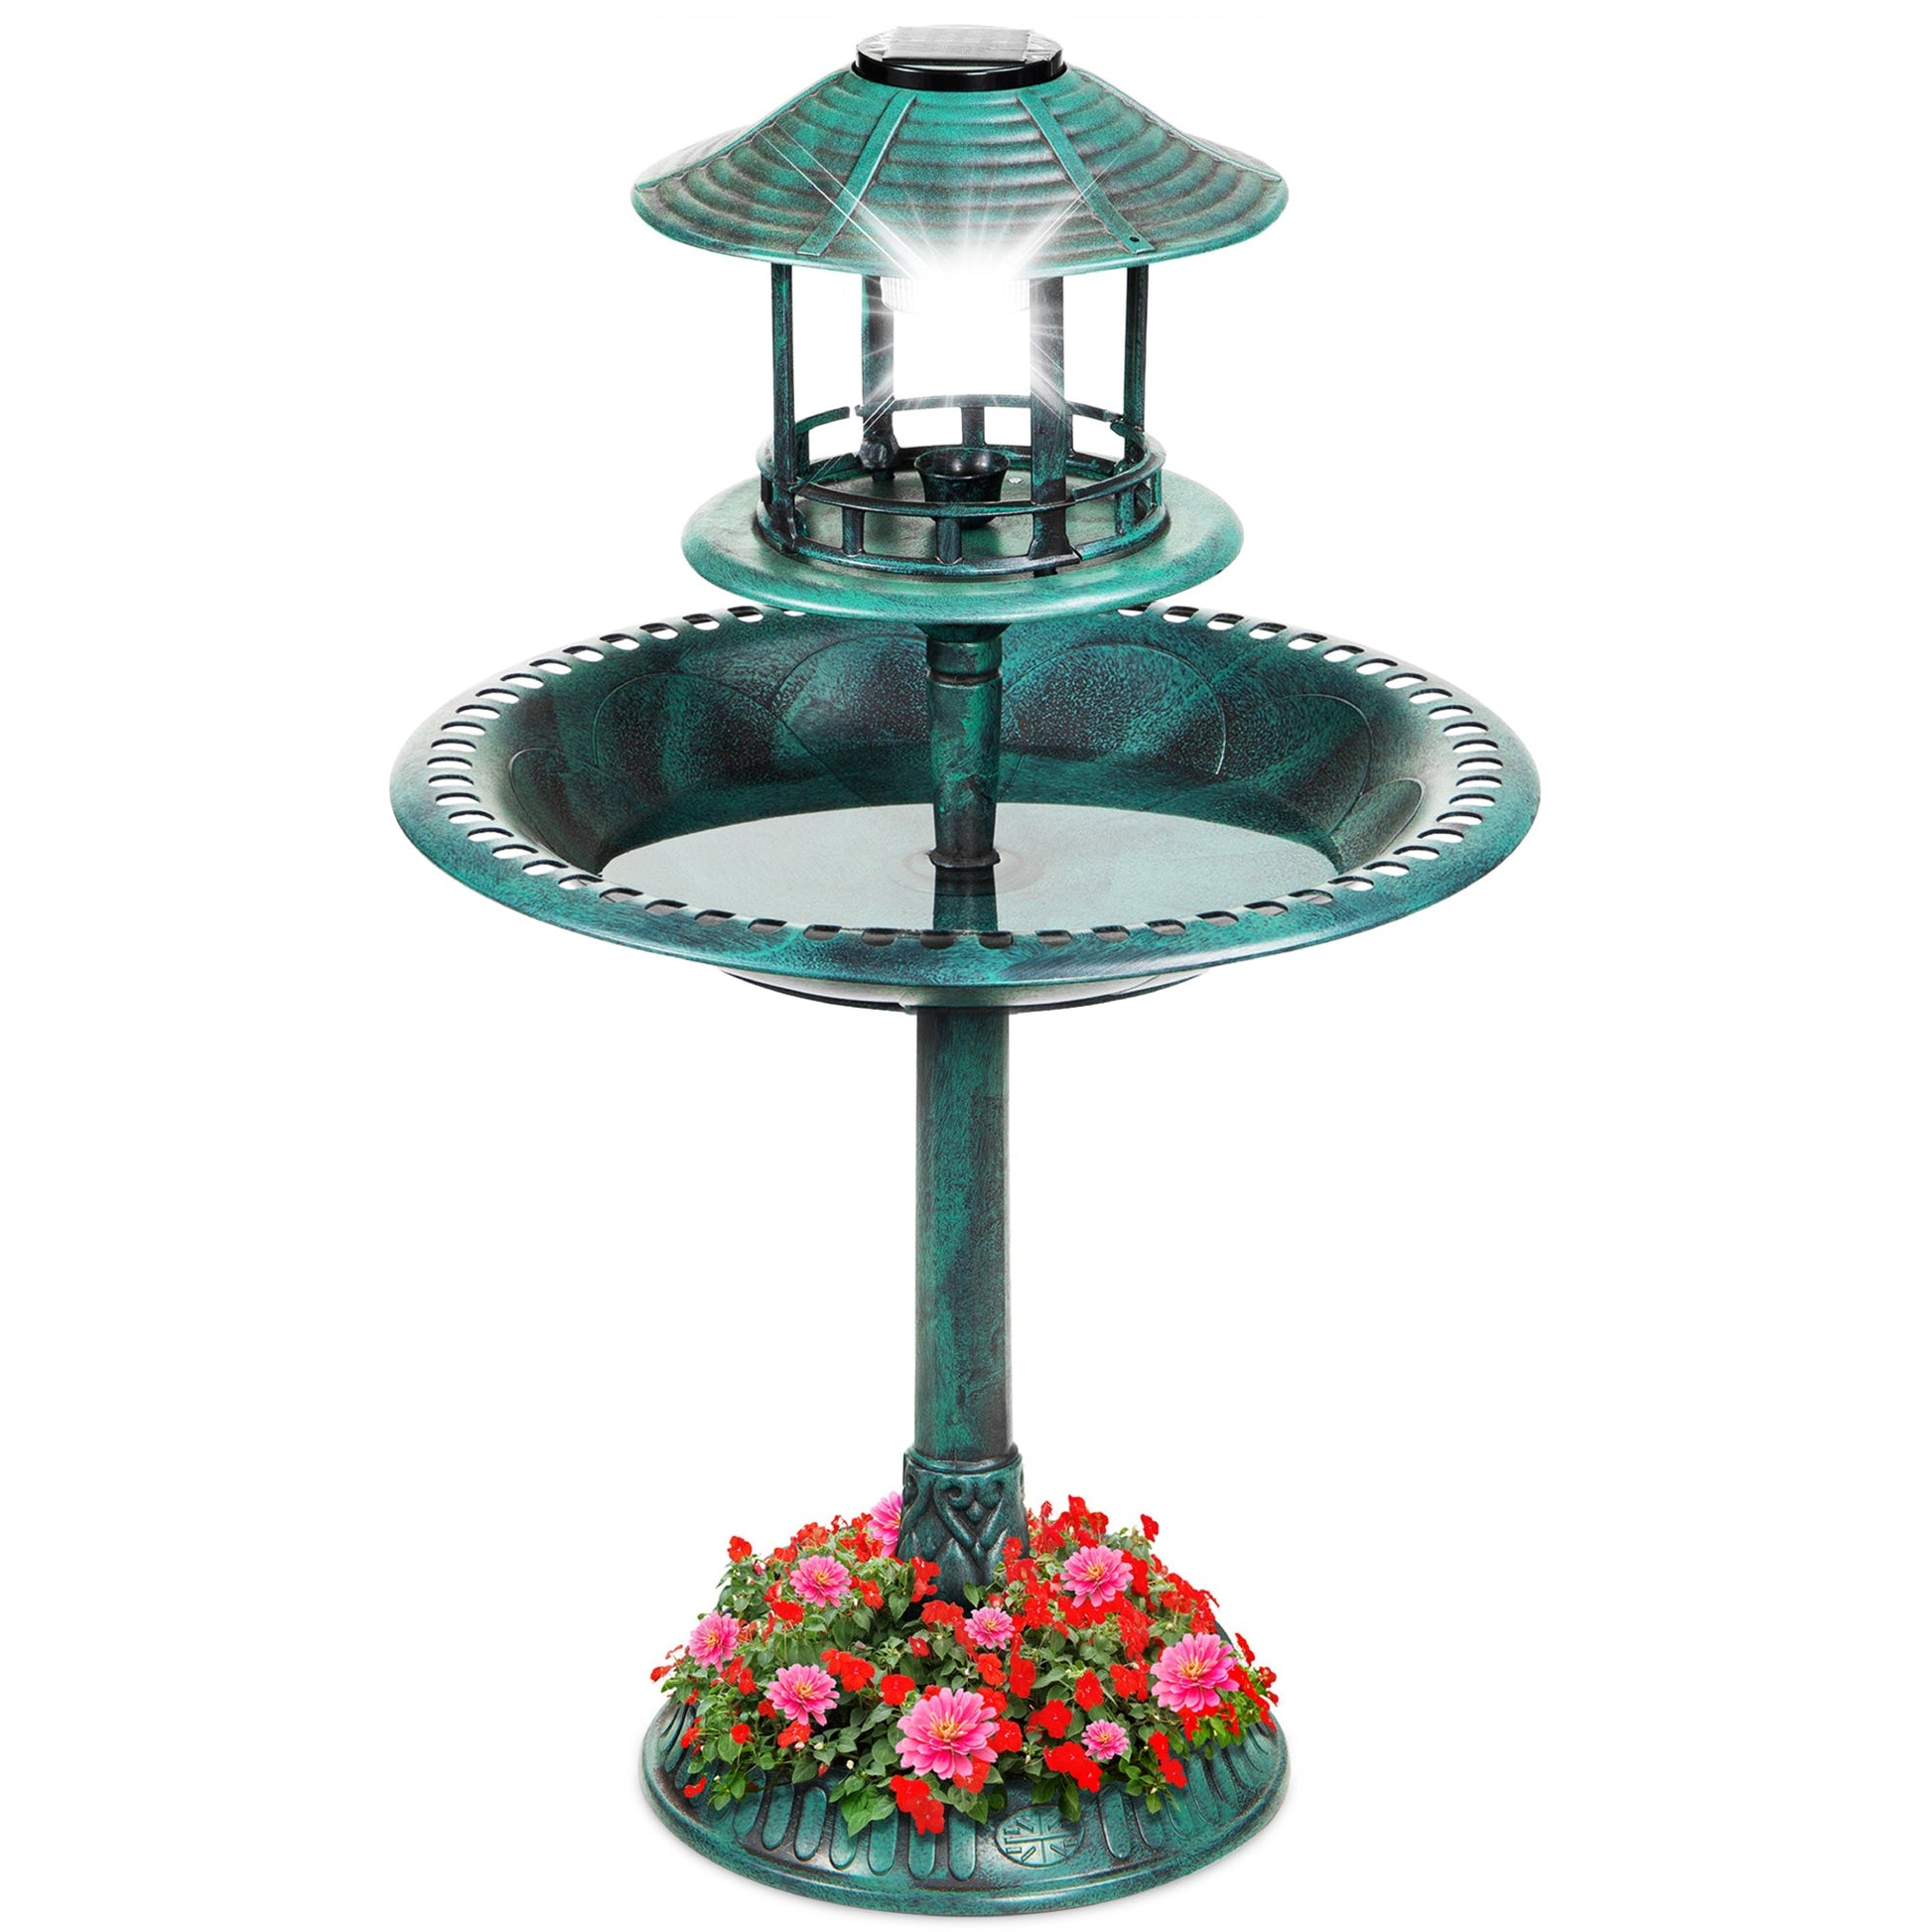 Solar Lighted Outdoor Pedestal Bird Bath w/ Planter, Decorative Bird Cage